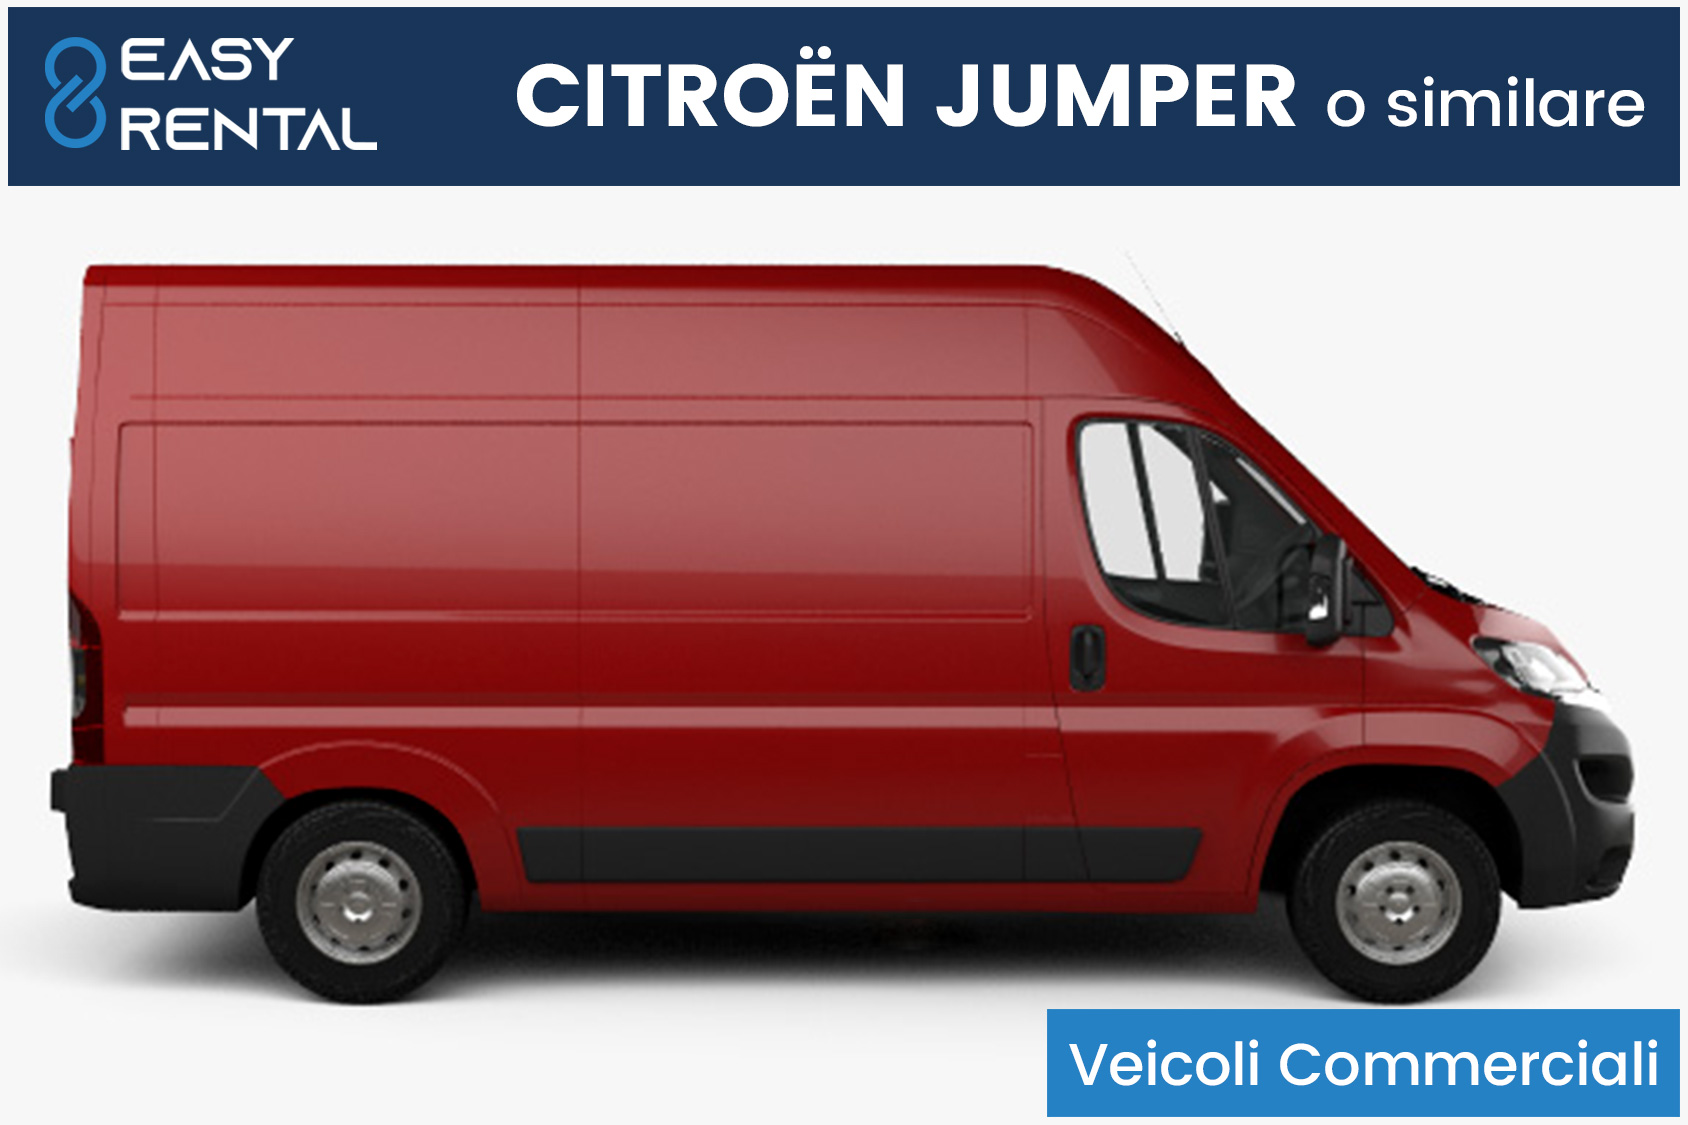 Citroen Jumper noleggio furgoni commerciali breve termine Verona e provincia